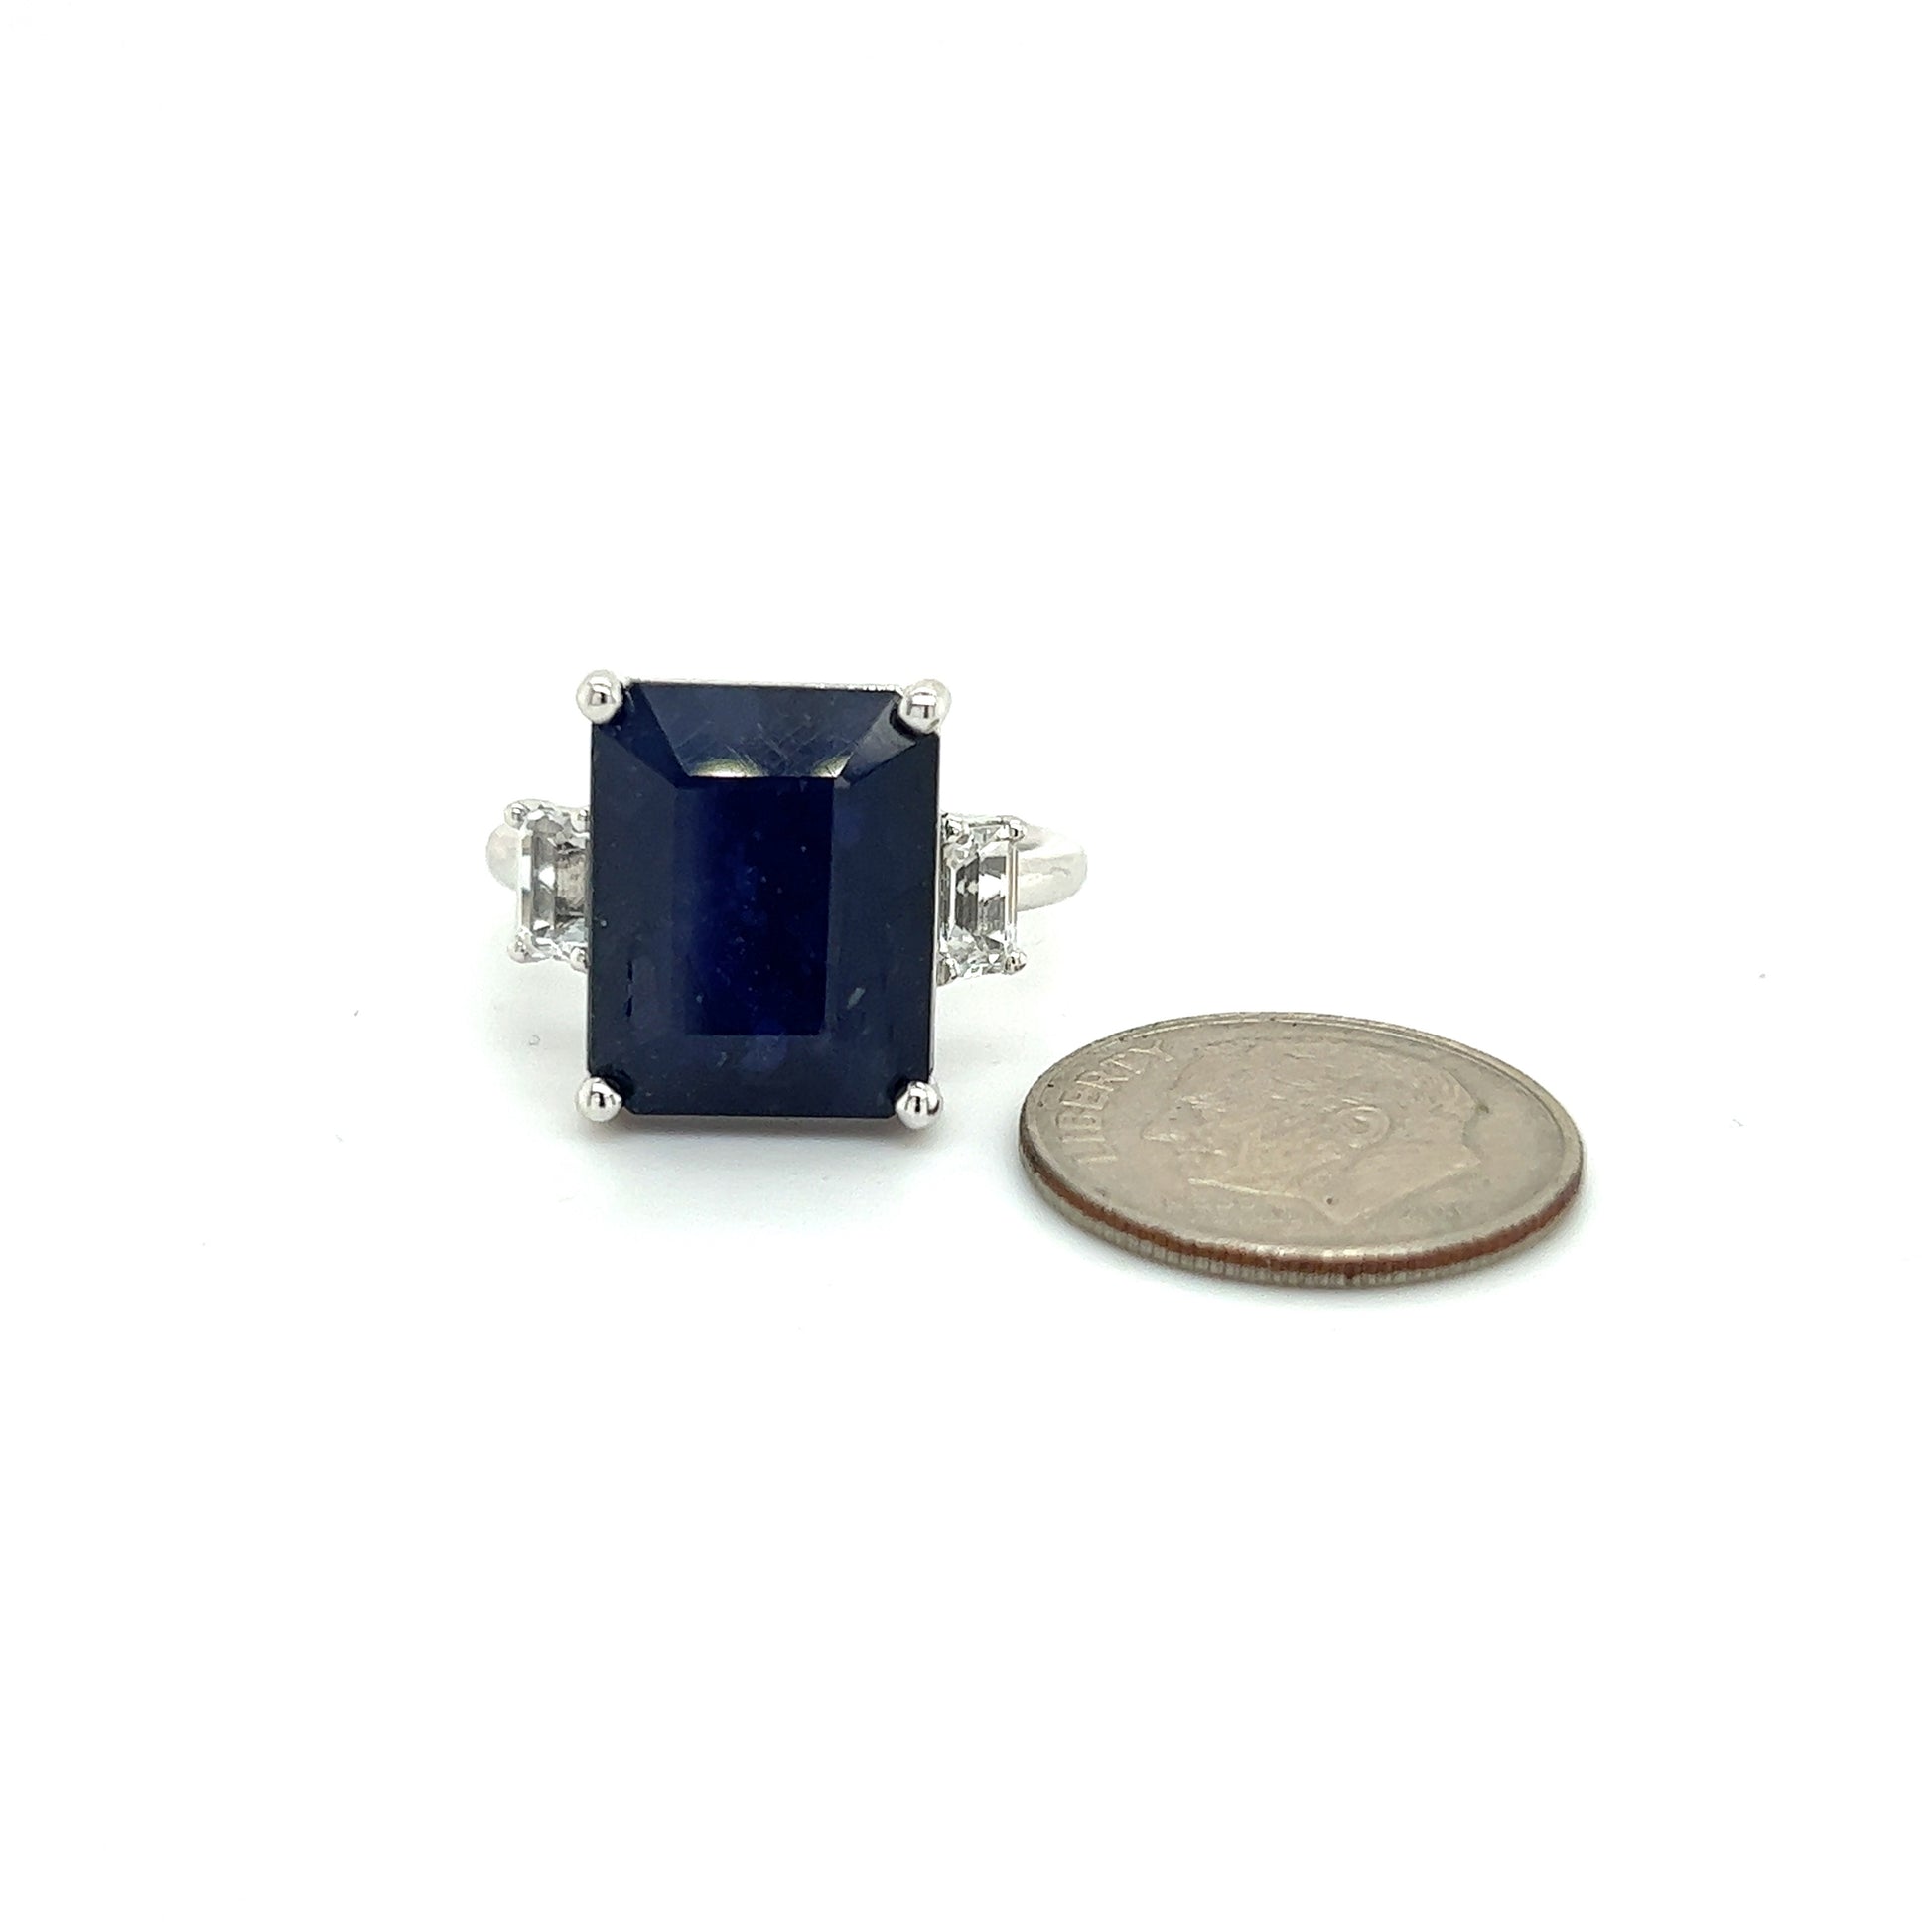 Natural Sapphire Diamond Ring Size 7 14k W Gold 12.36 TCW Certified $3,475 219222 - Certified Fine Jewelry